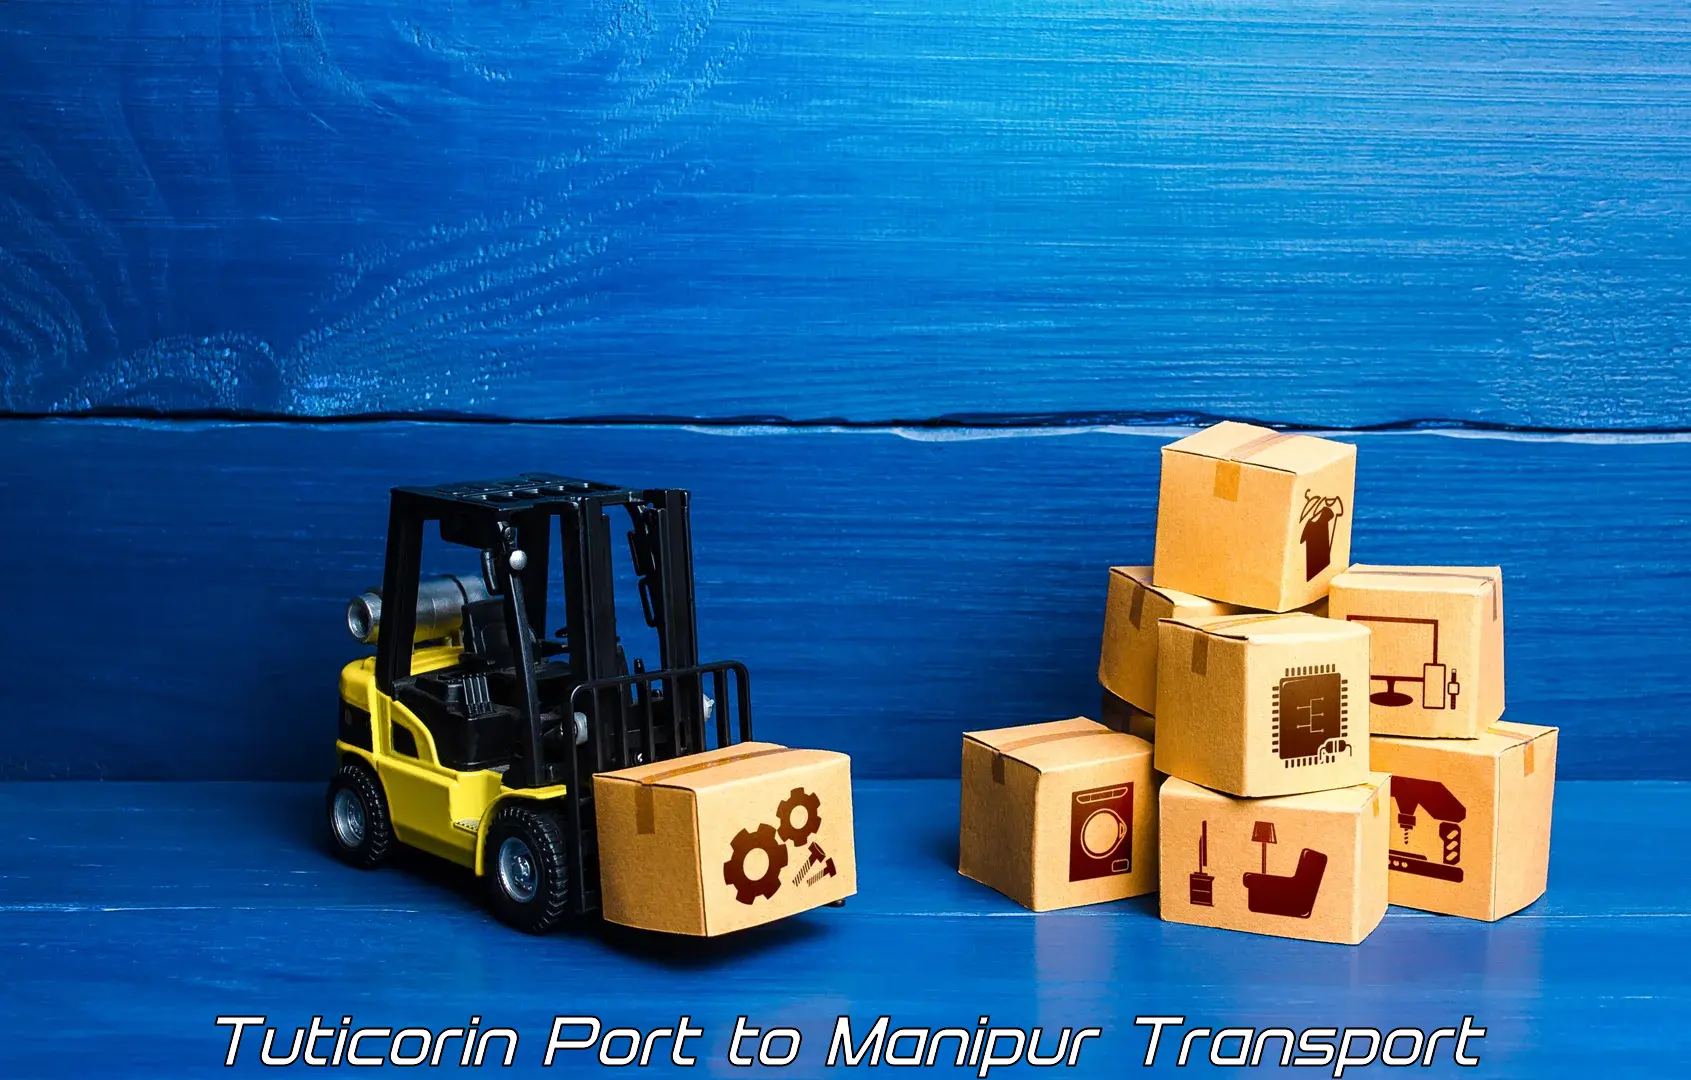 Transport in sharing in Tuticorin Port to Manipur